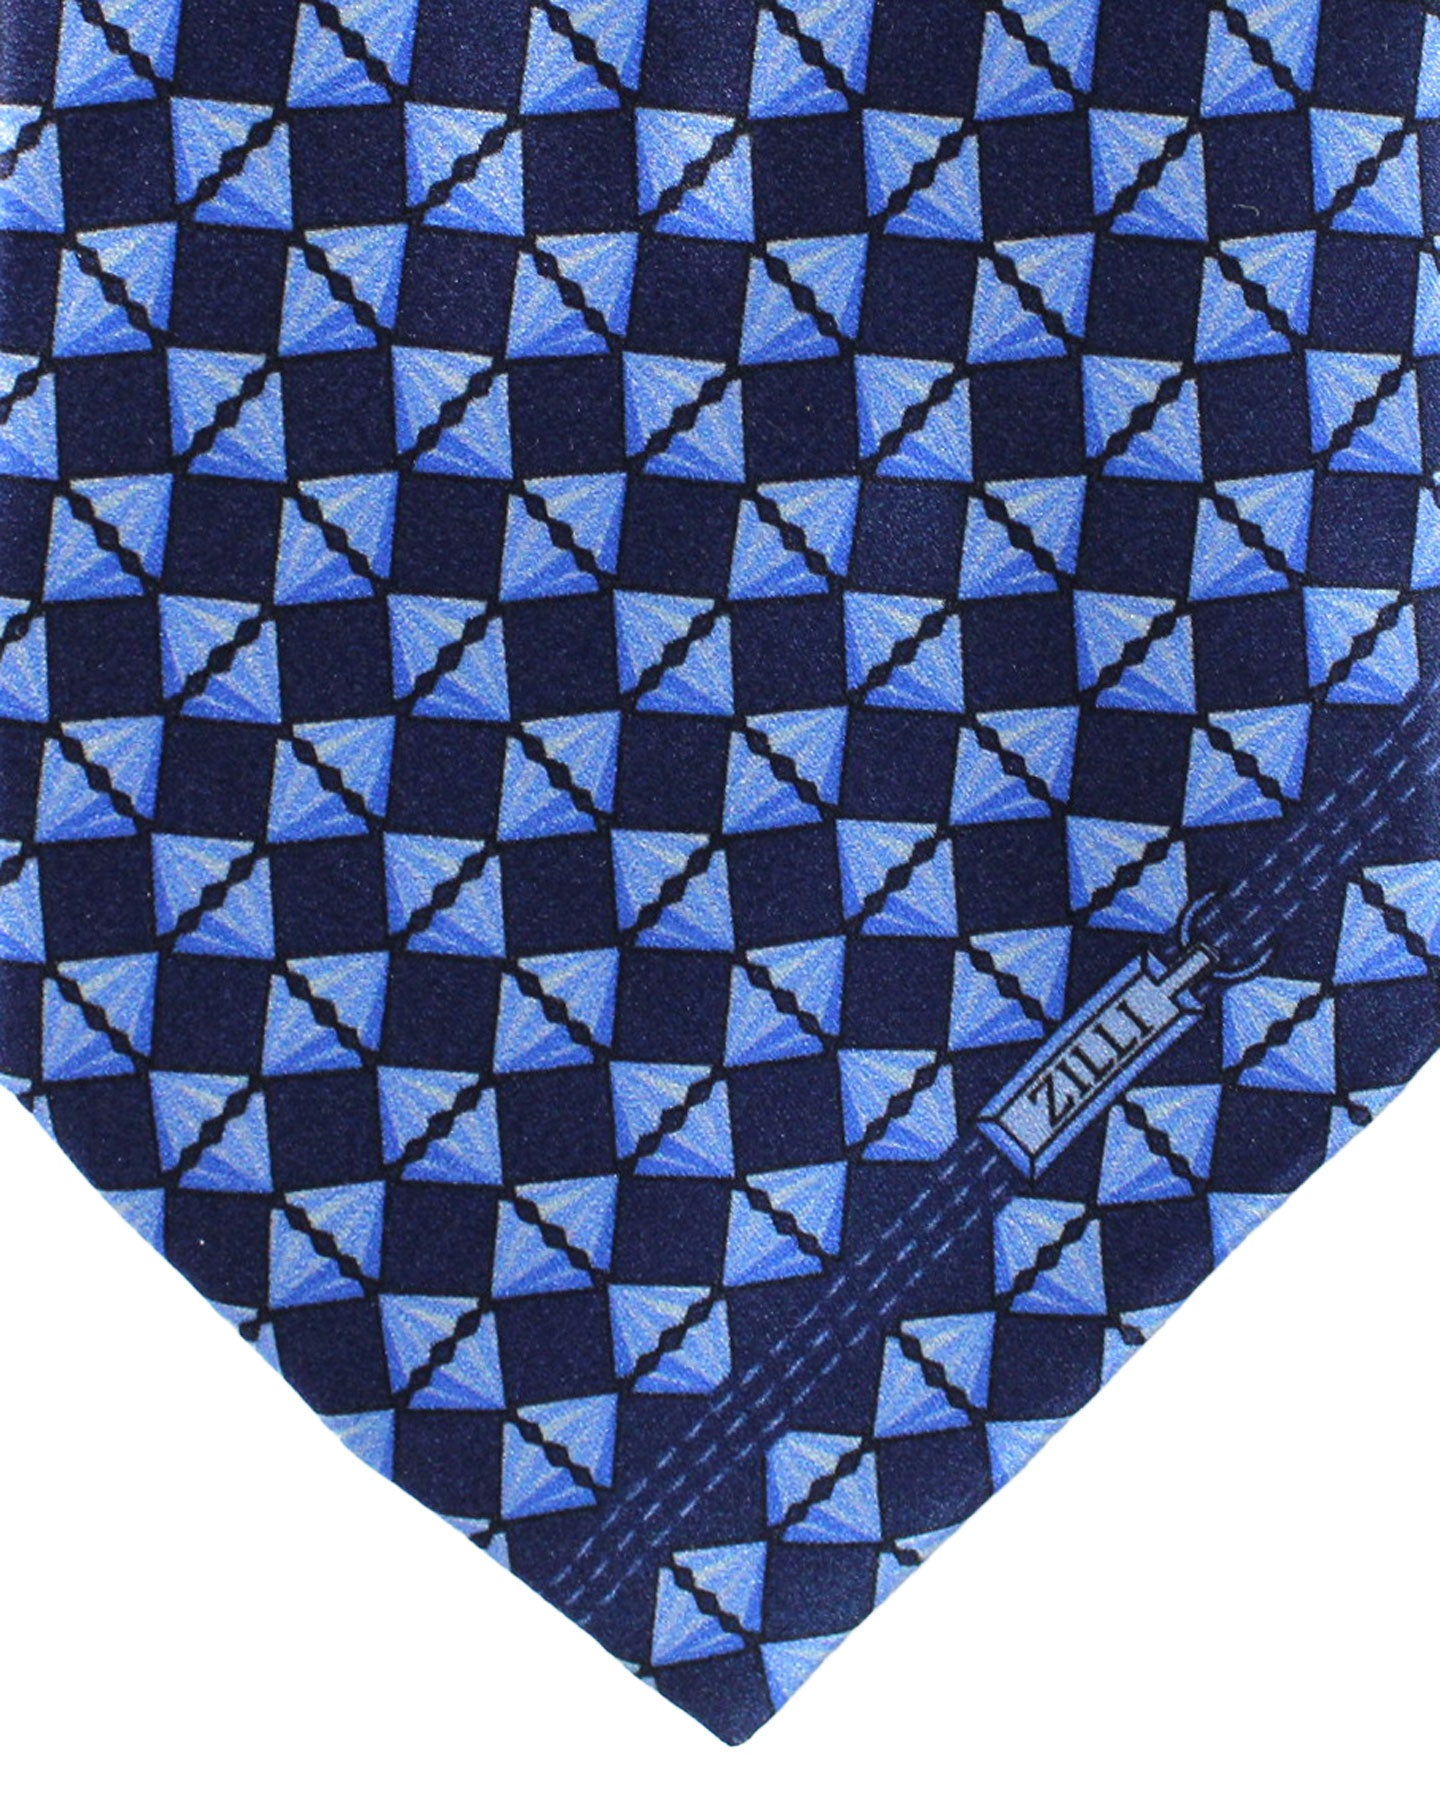 Zilli Silk Tie Navy Blue Geometric - Wide Necktie